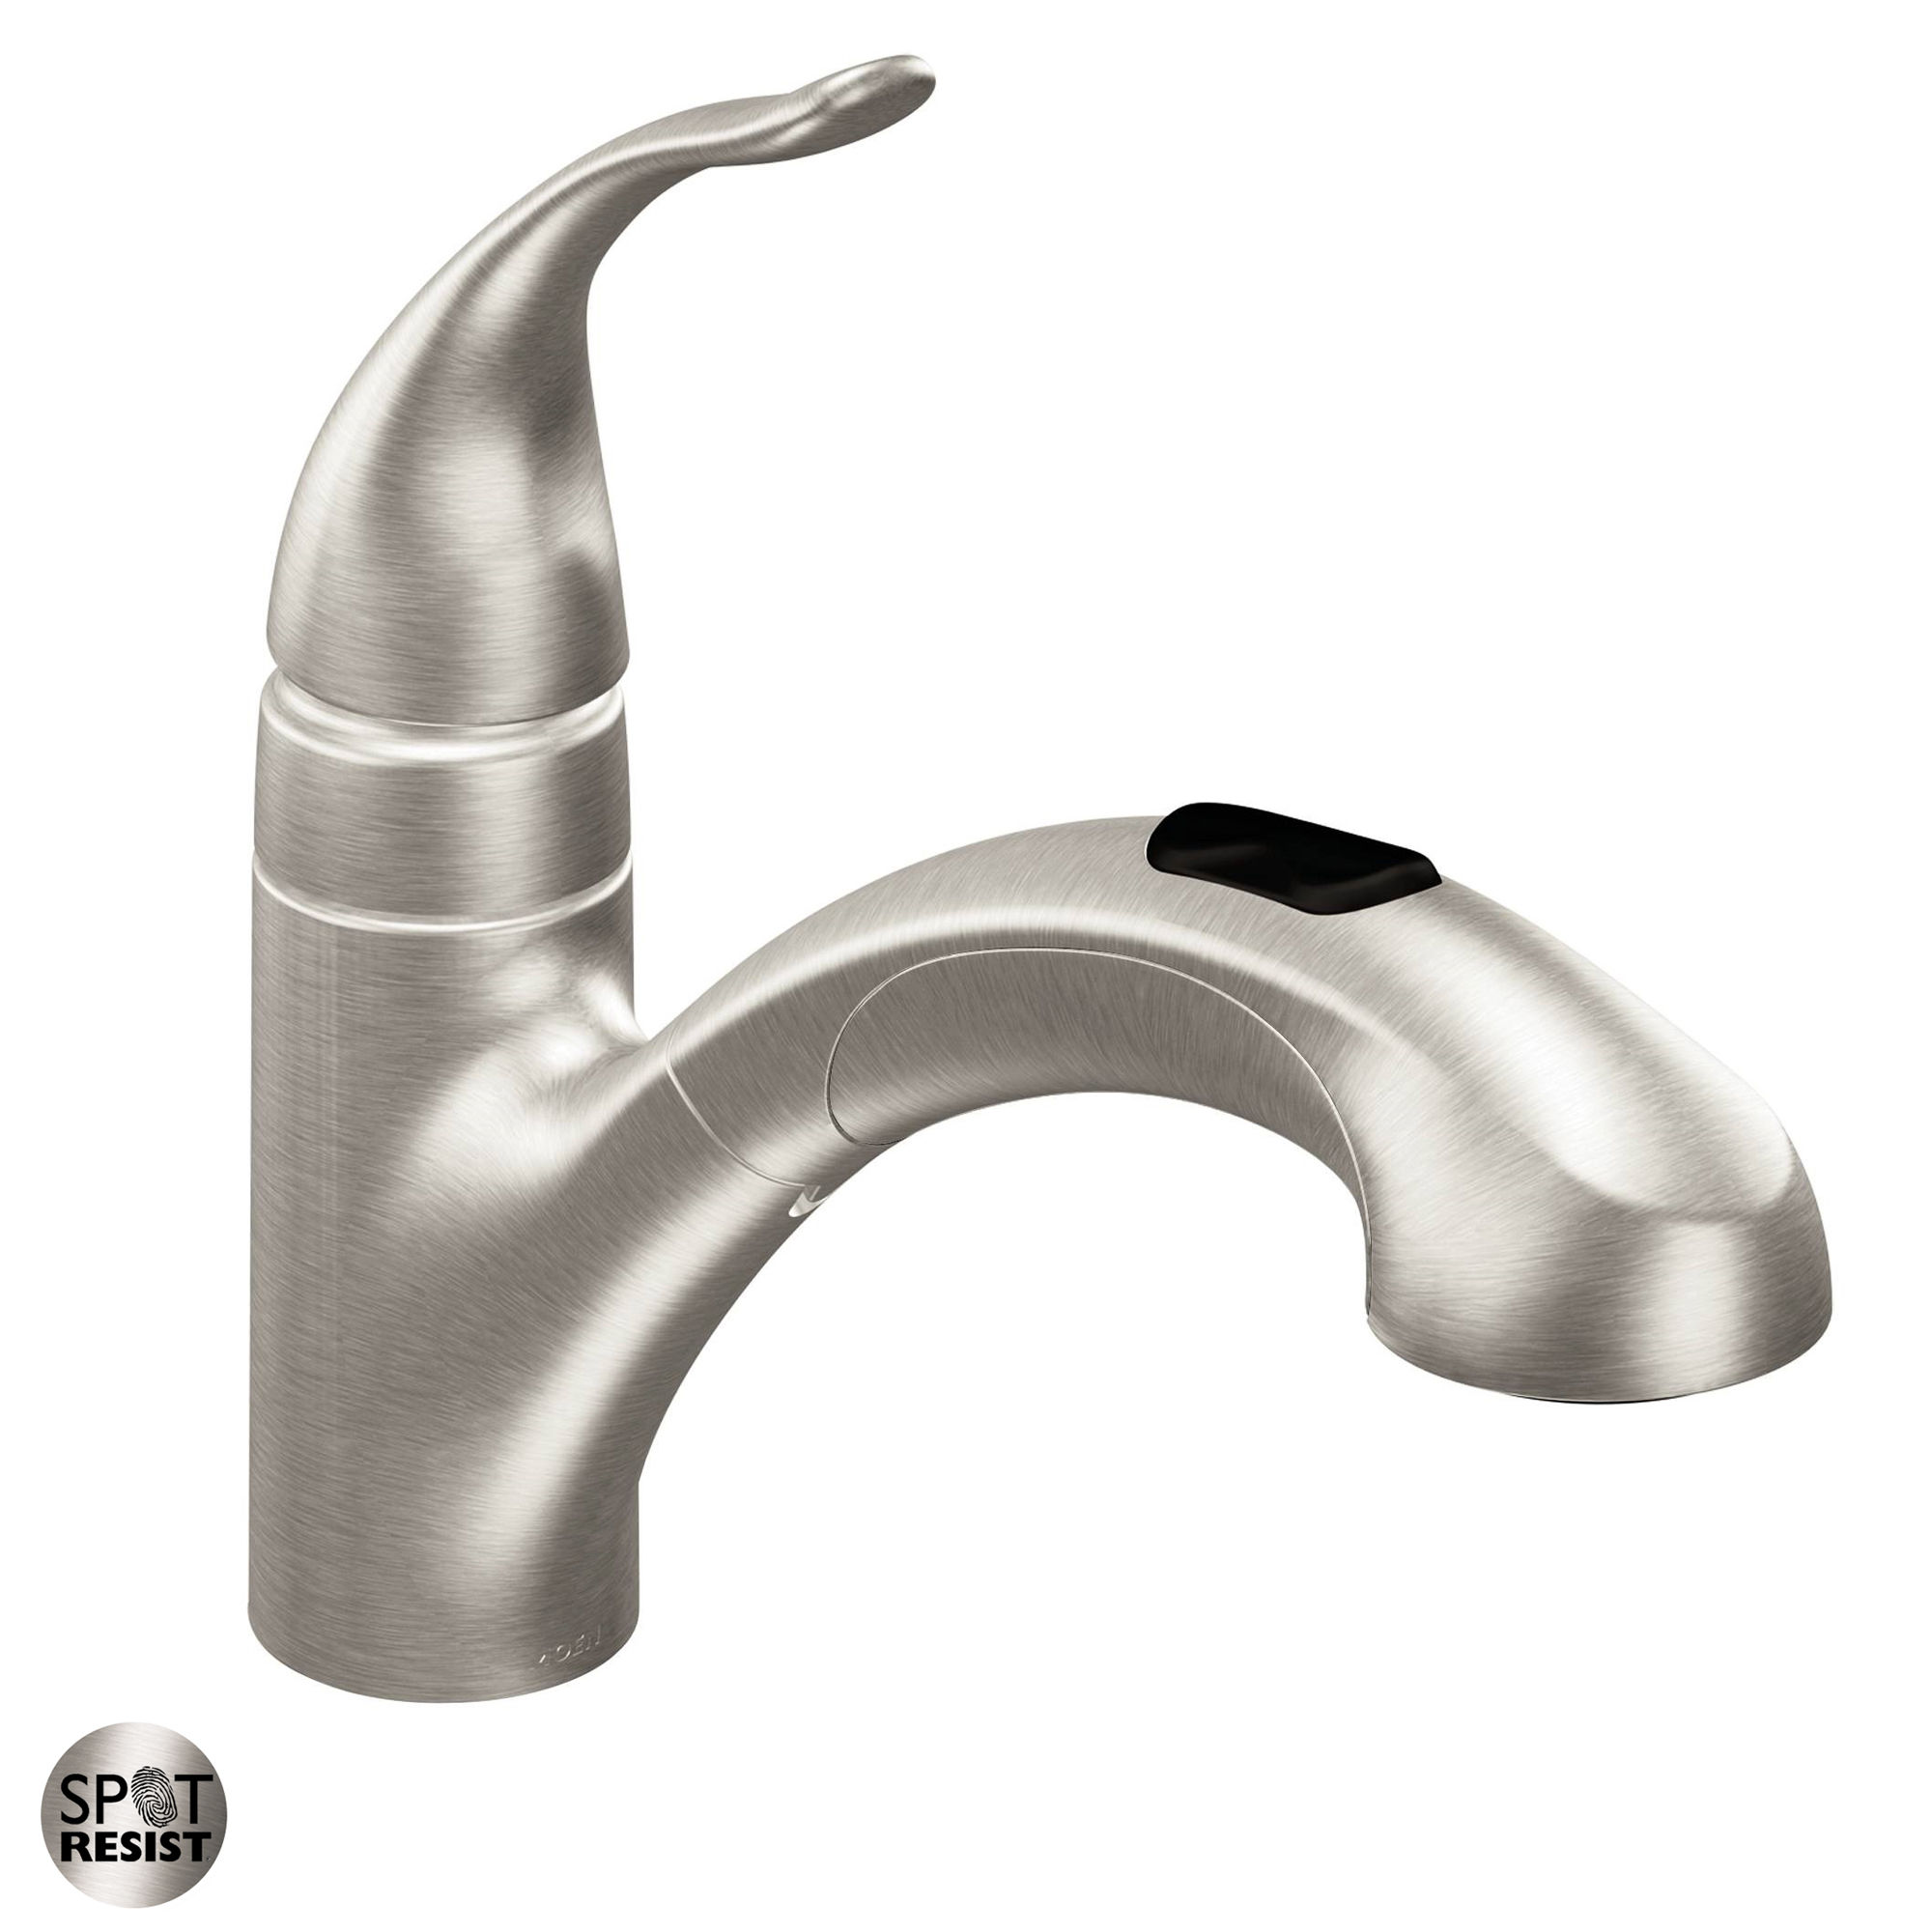 Moen 5995SRS Kitchen Faucet Silver for sale online 